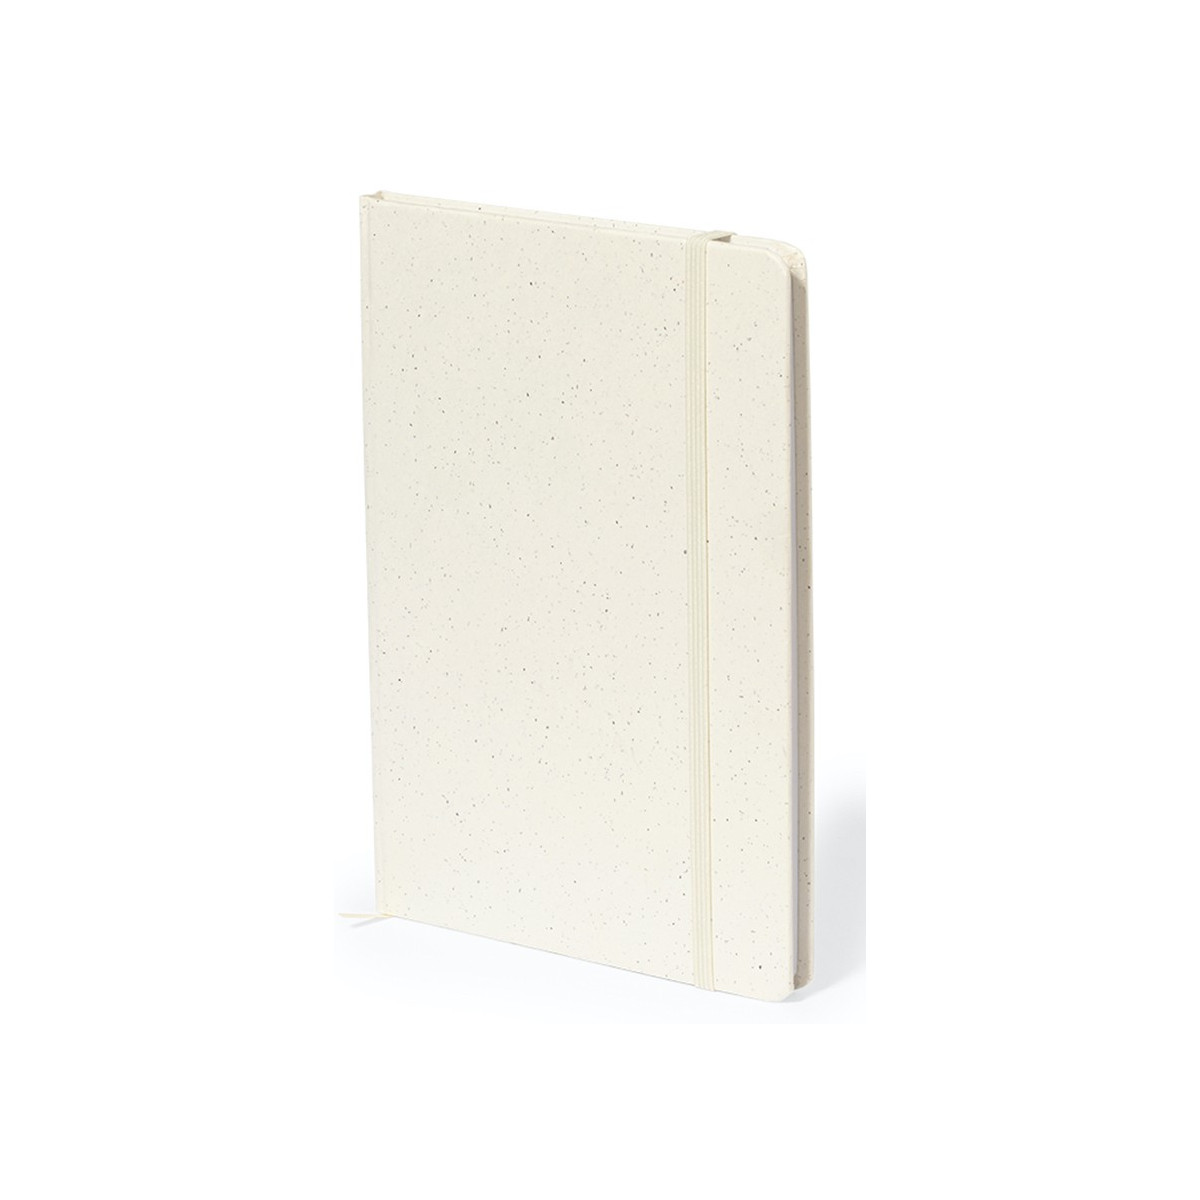 Notebook con fascia elastica